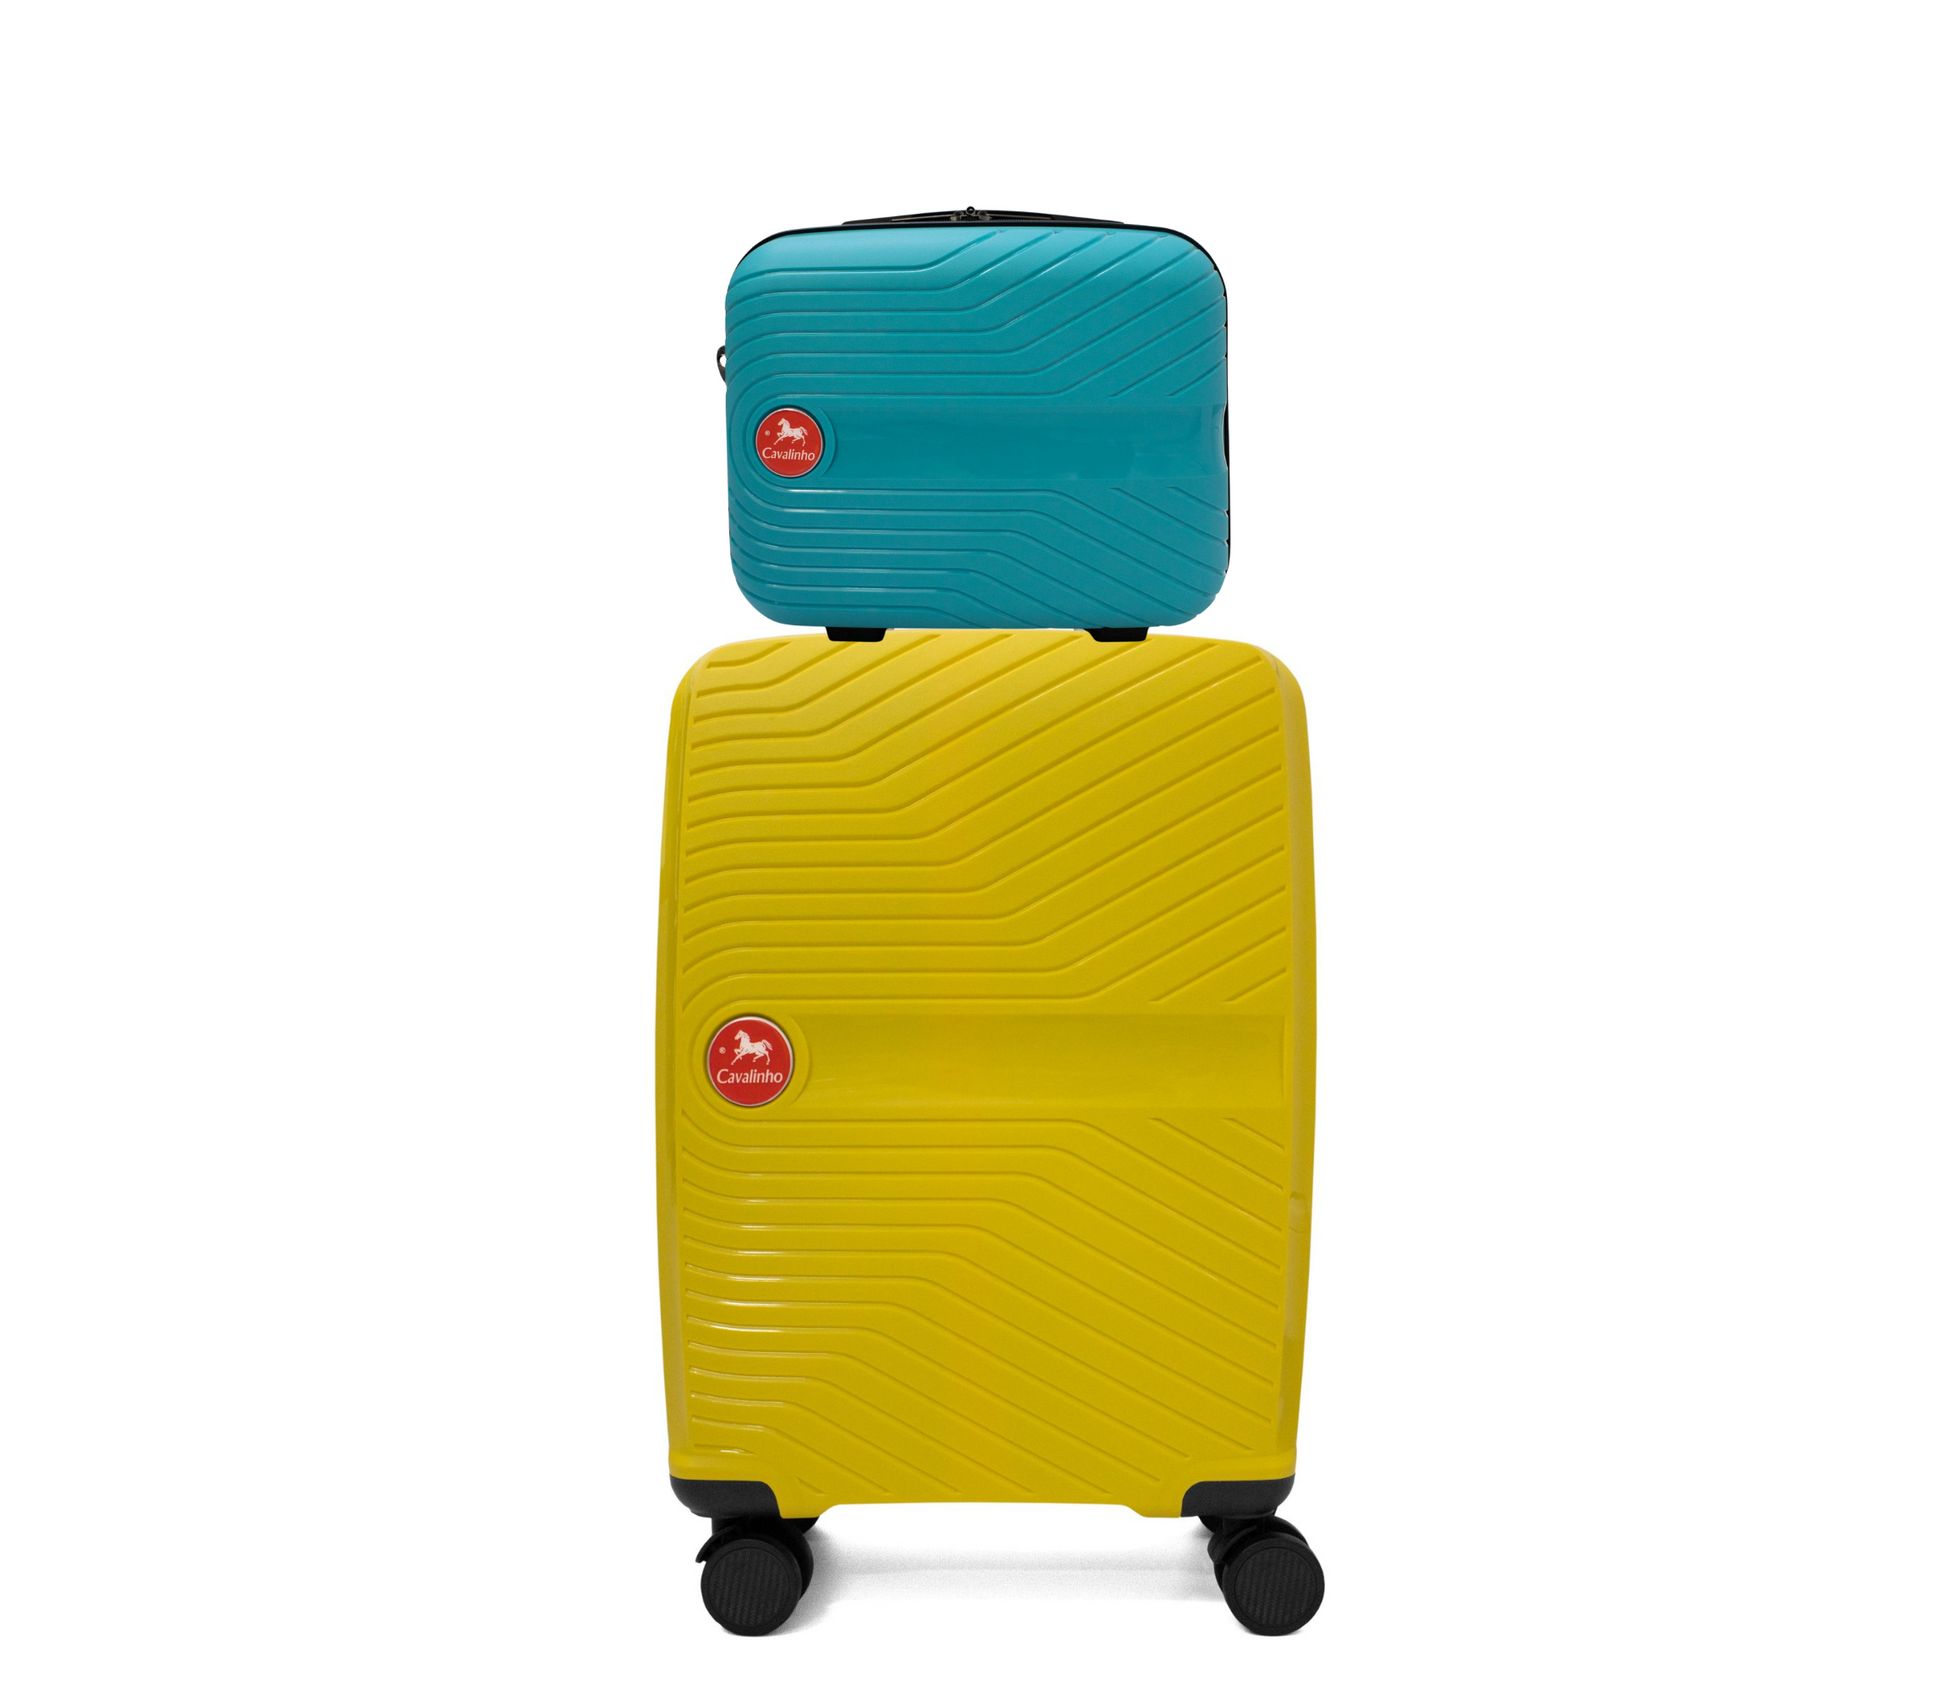 Cavalinho Colorful 2 Piece Luggage Set (15" & 19") - DarkTurquoise Yellow - 68020004.2508.S1519._1